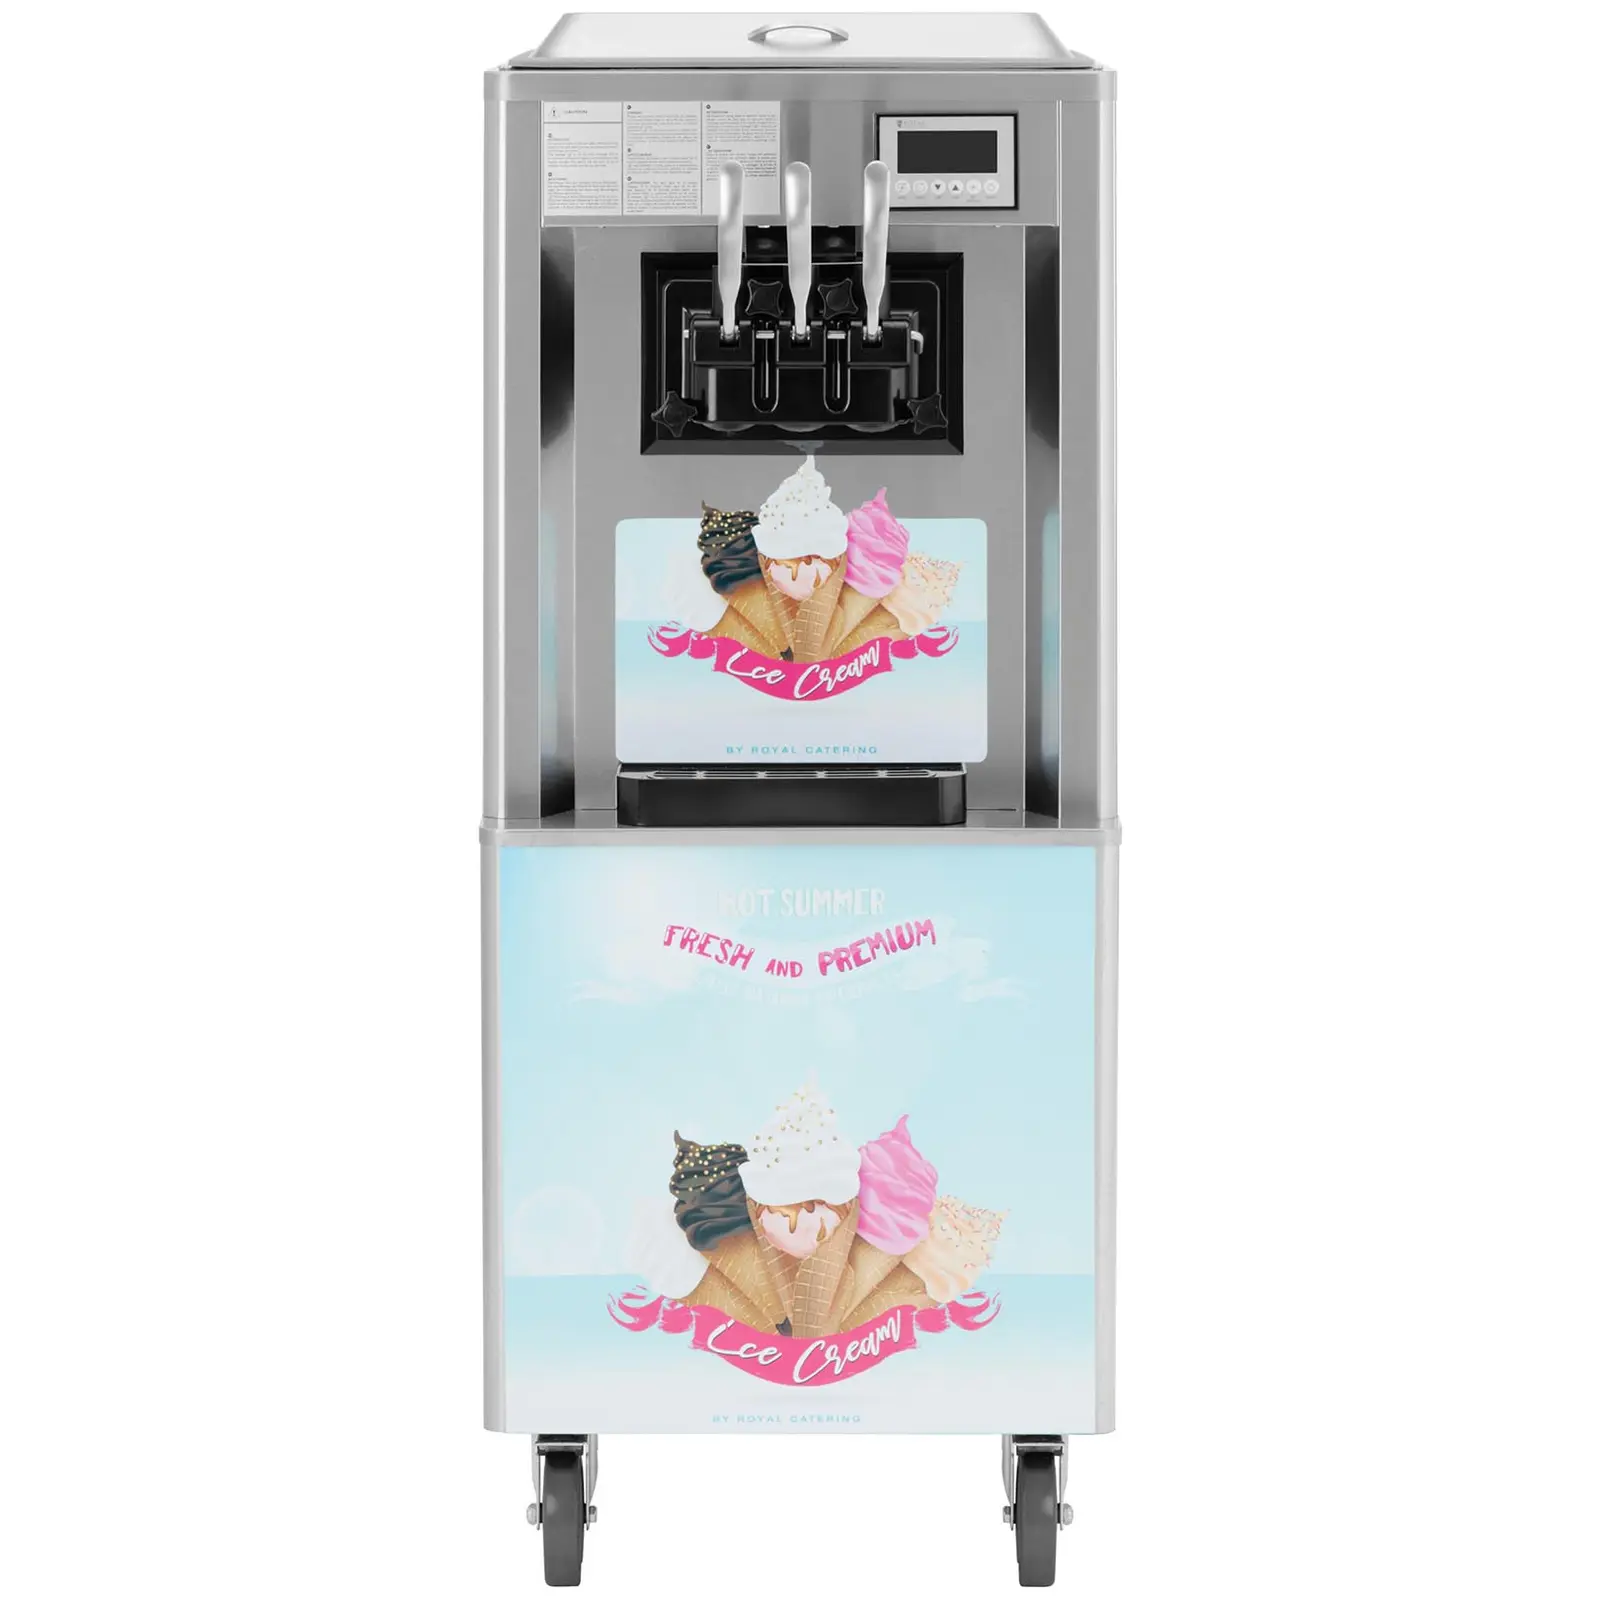 Máquina de helados soft - 2140 W - 33 l/h - 3 sabores - Royal Catering